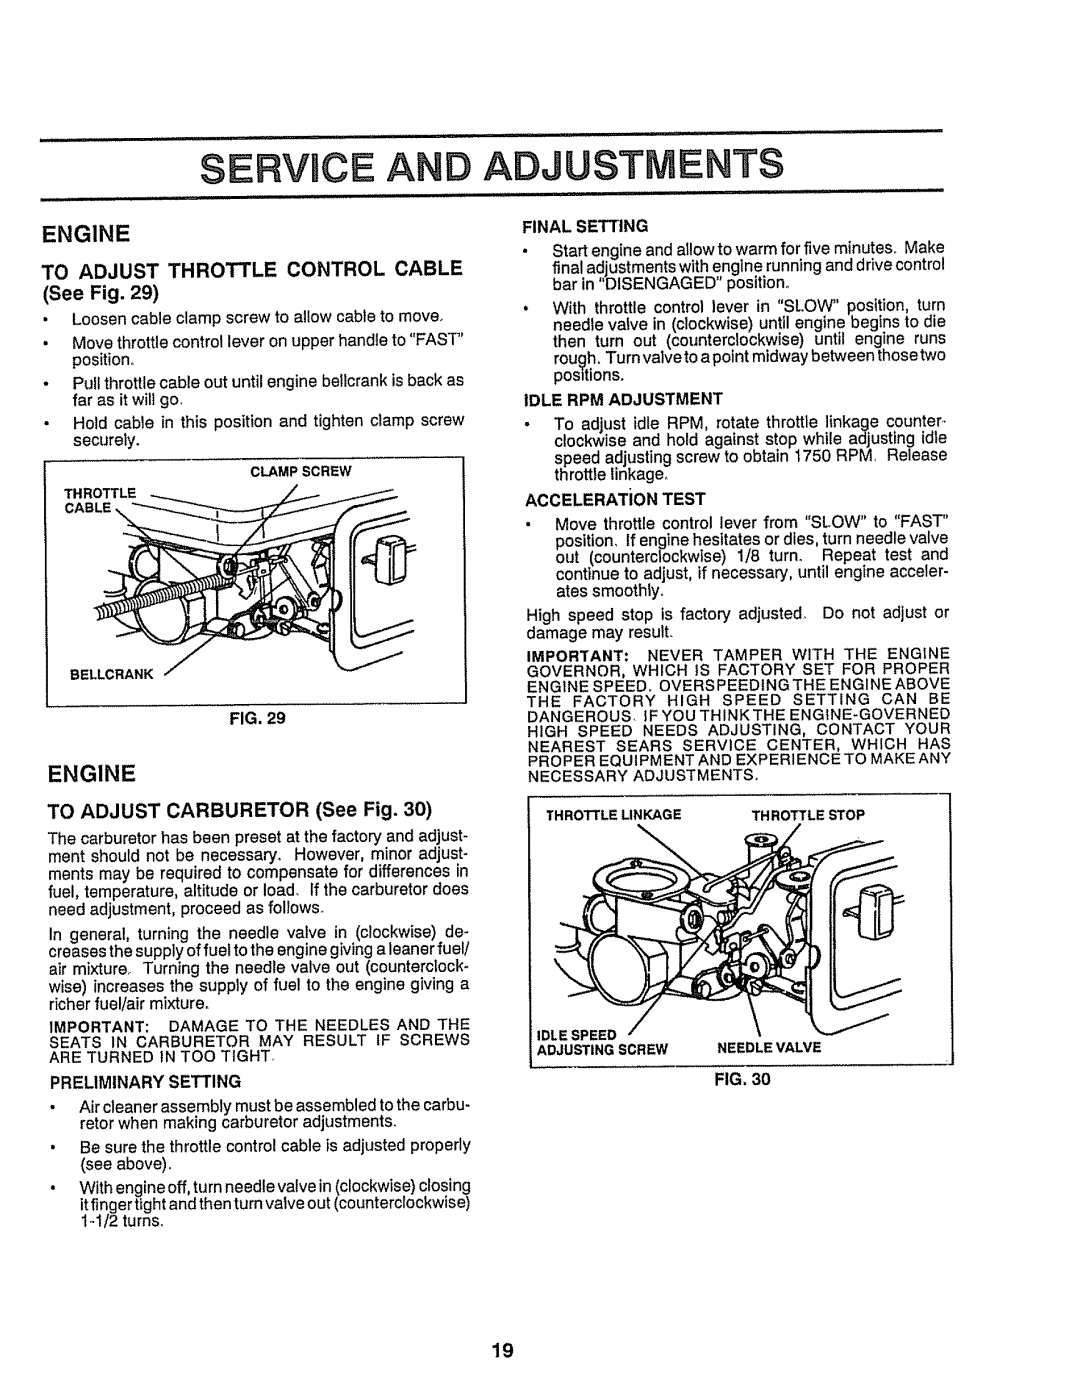 Craftsman 917-299751 Ervice And, Adjustments, TO ADJUST THROTTLE CONTROL CABLE See Fig, TO ADJUST CARBURETOR See Fig 